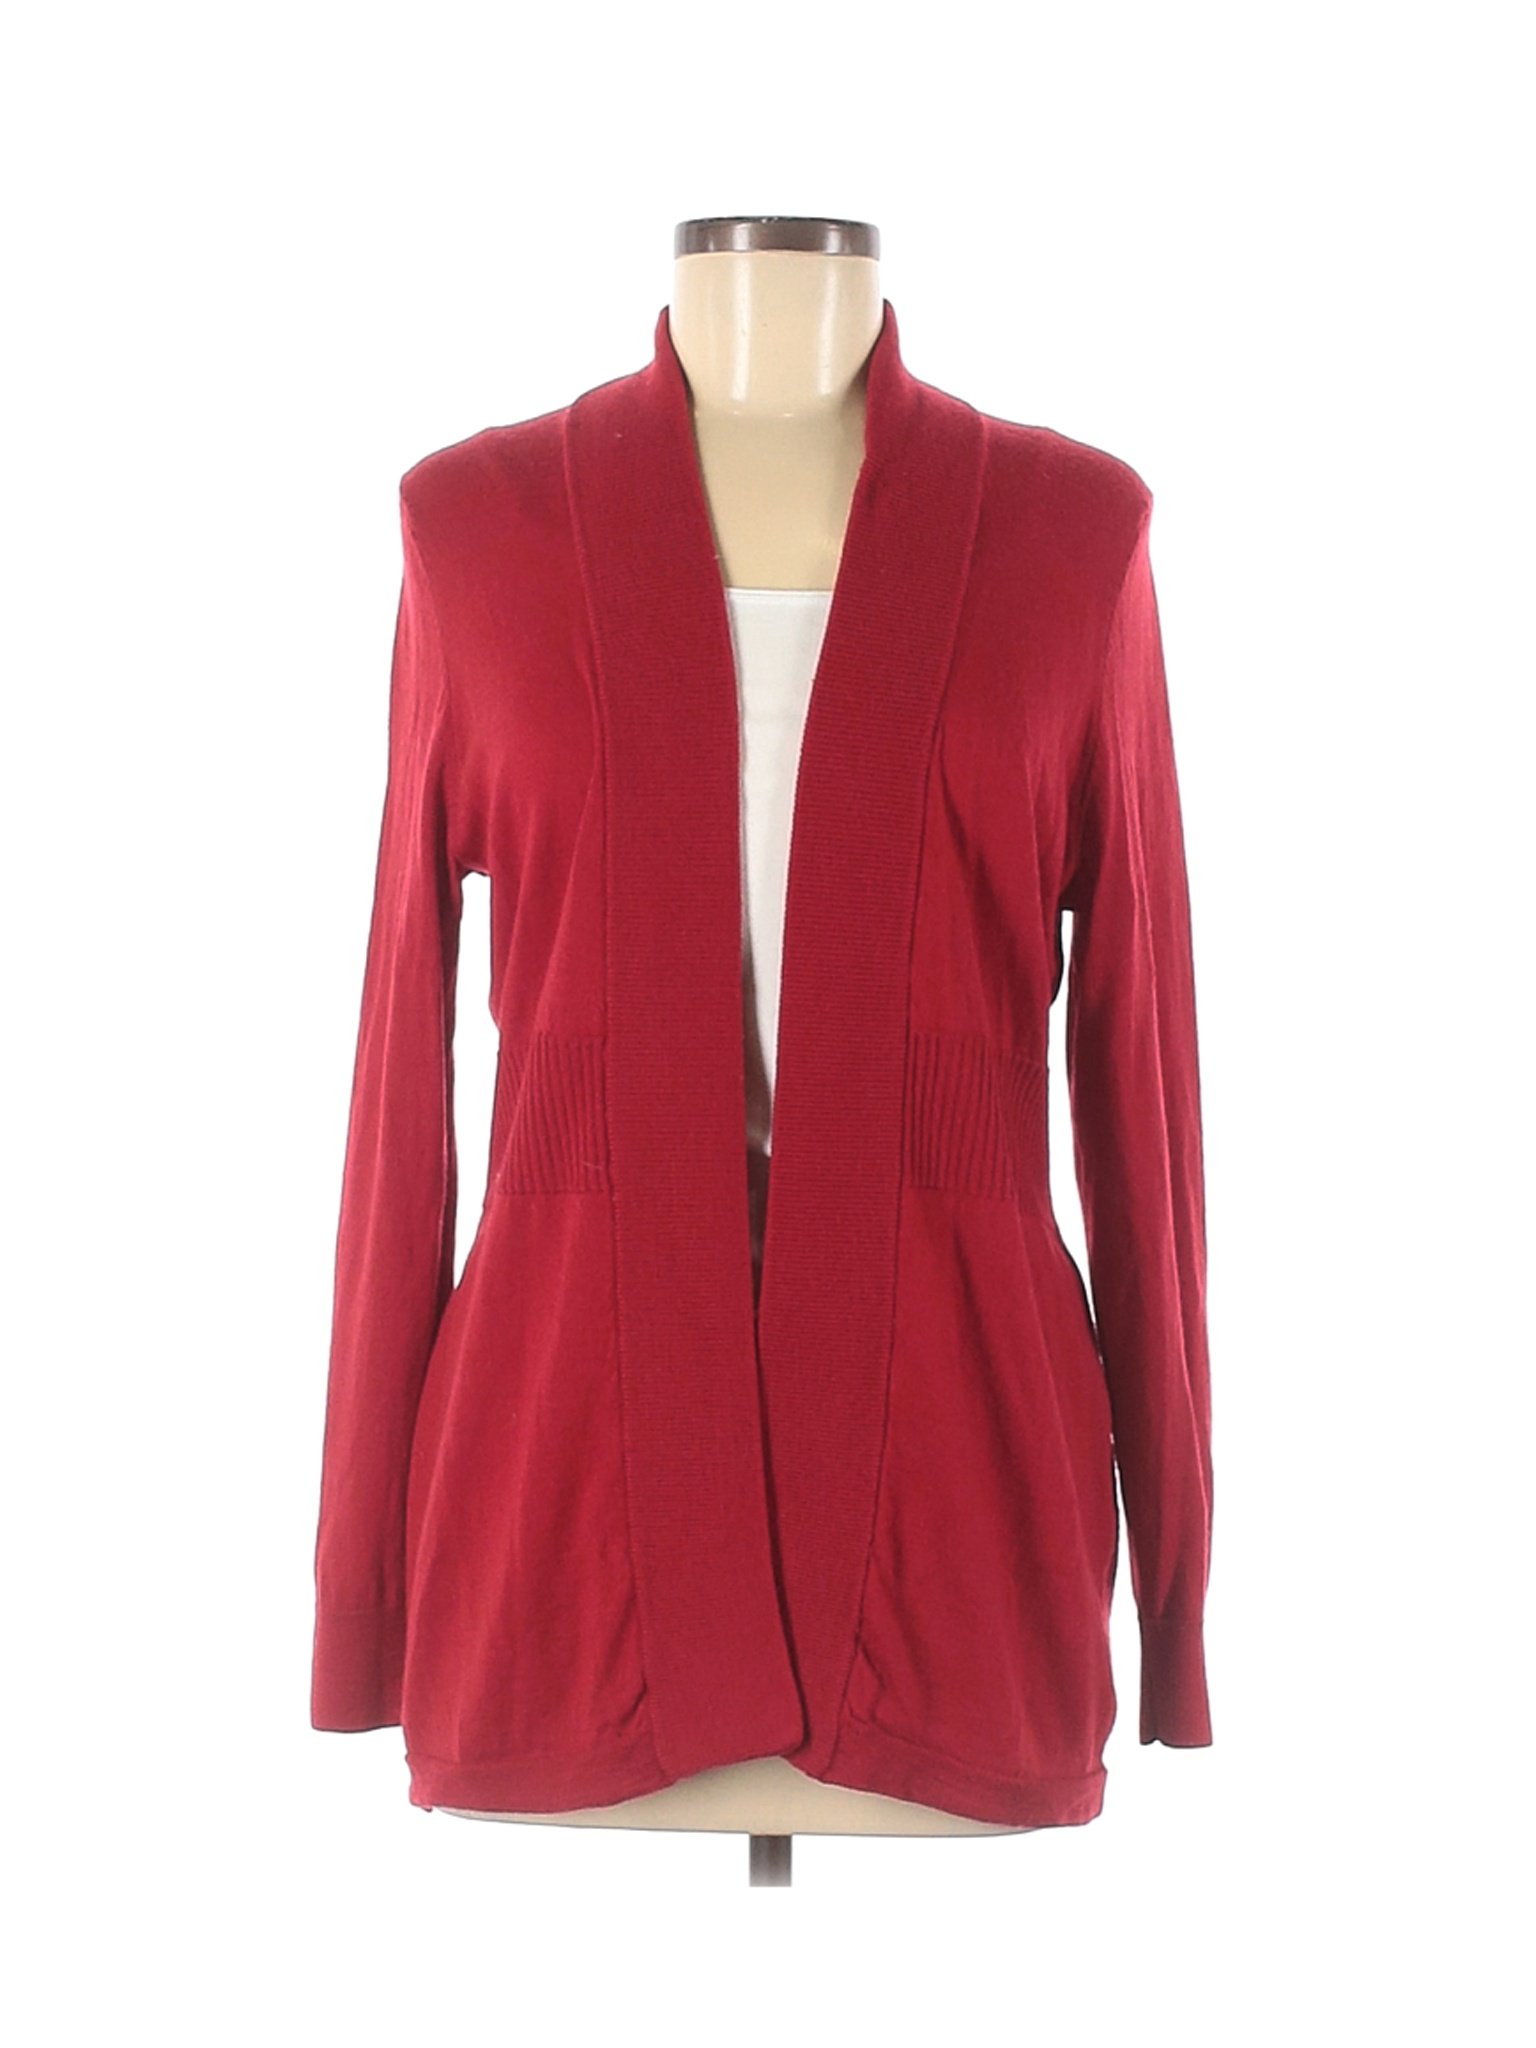 Talbots Women Red Wool Cardigan M | eBay